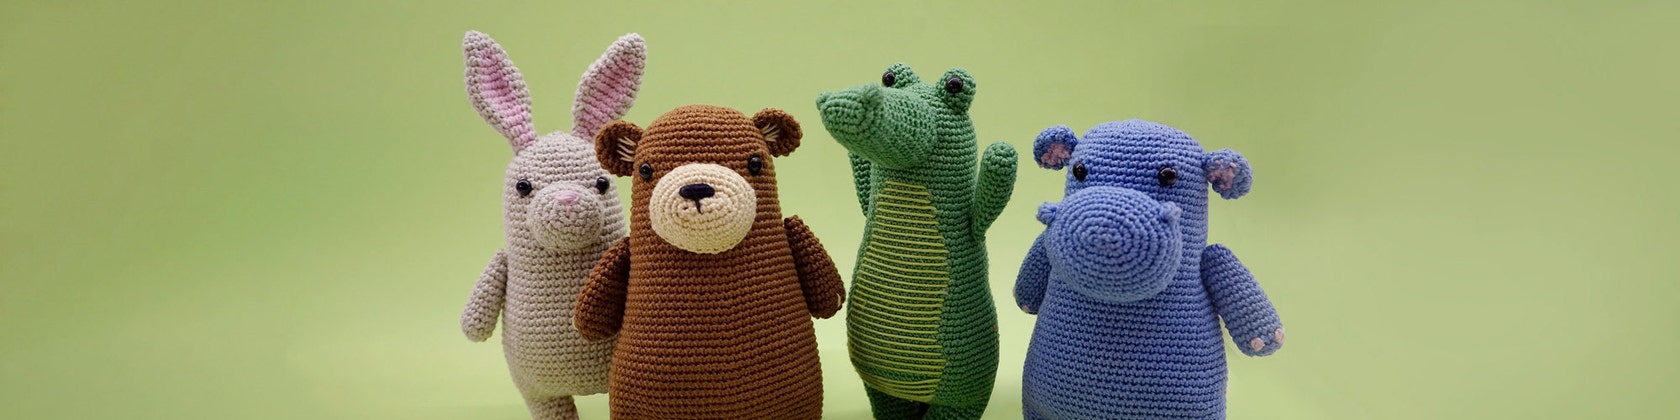 Easy Peasy Beginner Crochet Bundle | The Woobles